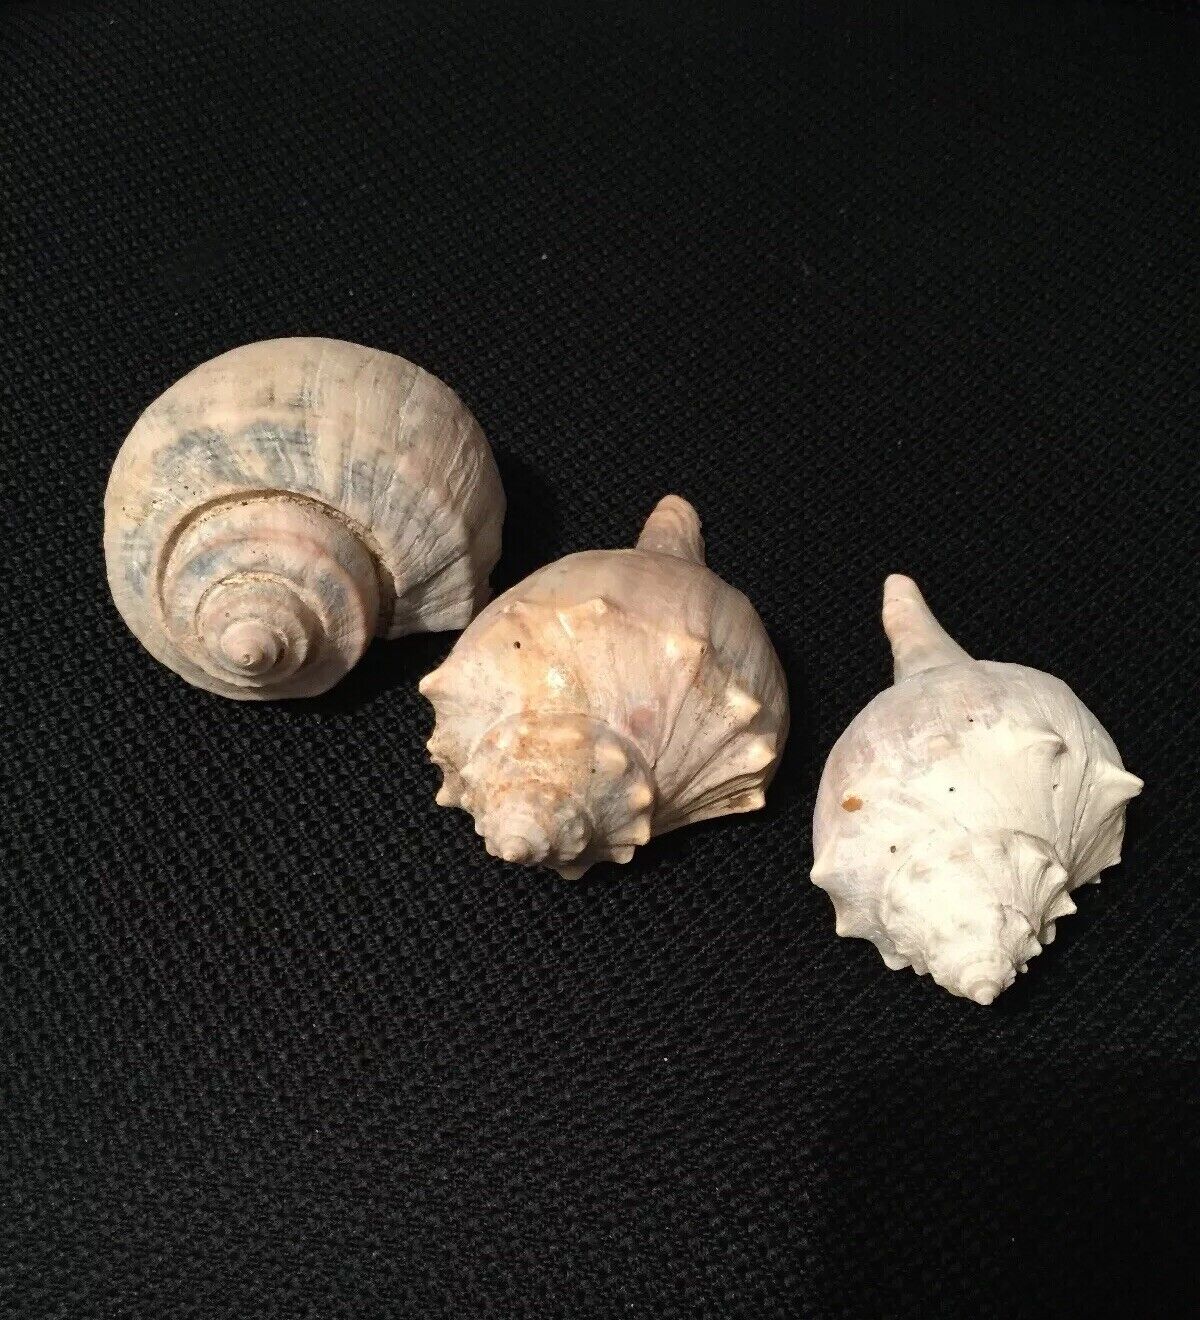 Lot of 3 Medium Queen Conch Sea Shells 4"- 5" Marine Ocean Seashore Decor Crafts Без бренда - фотография #6